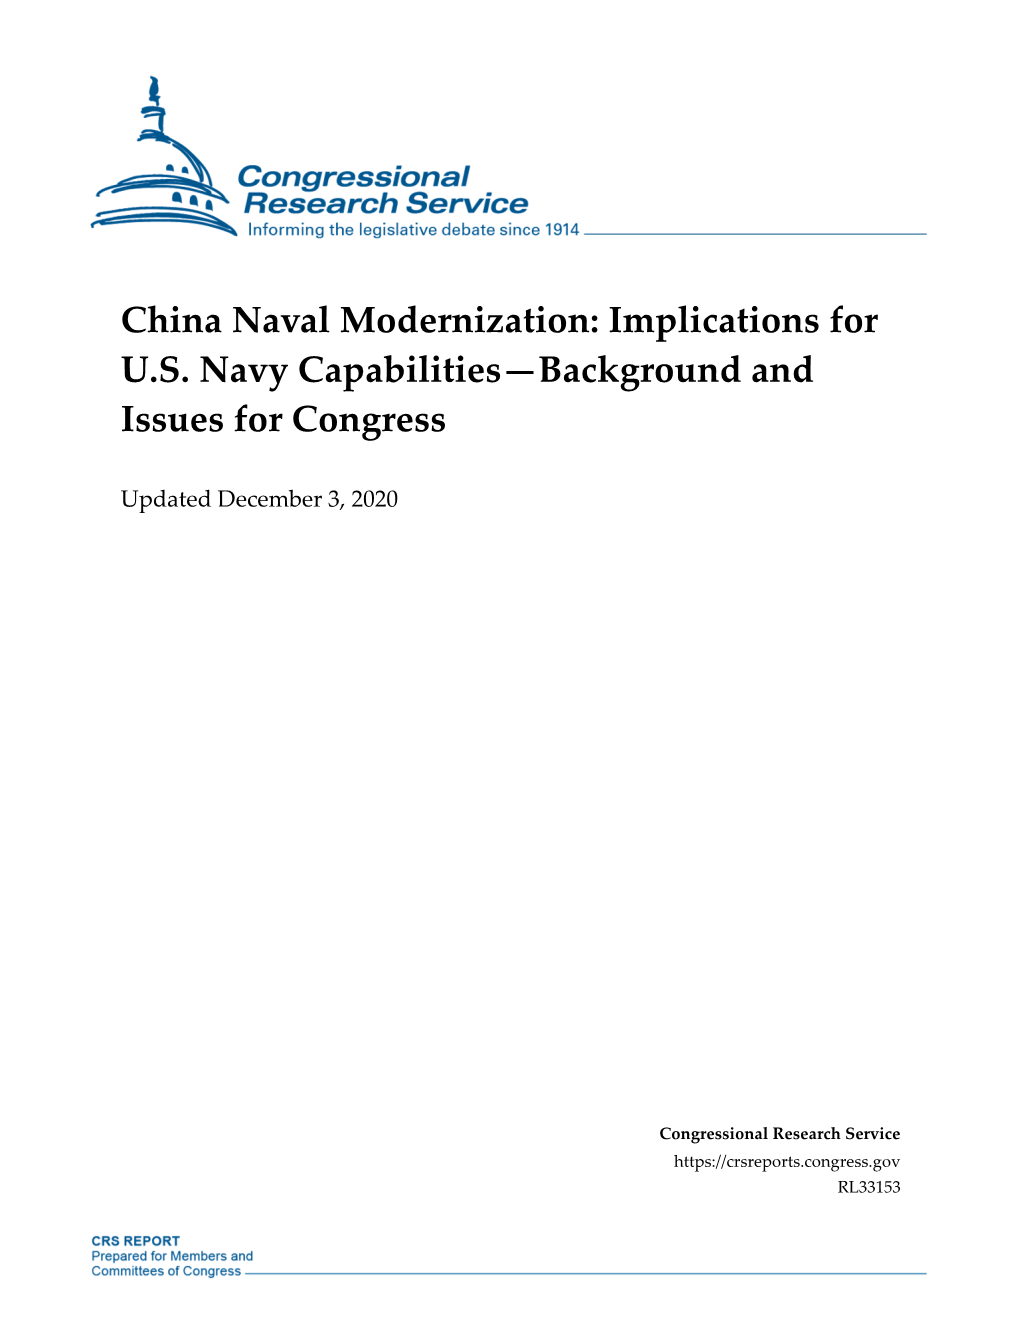 China Naval Modernization Implications for US Navy Capabilities